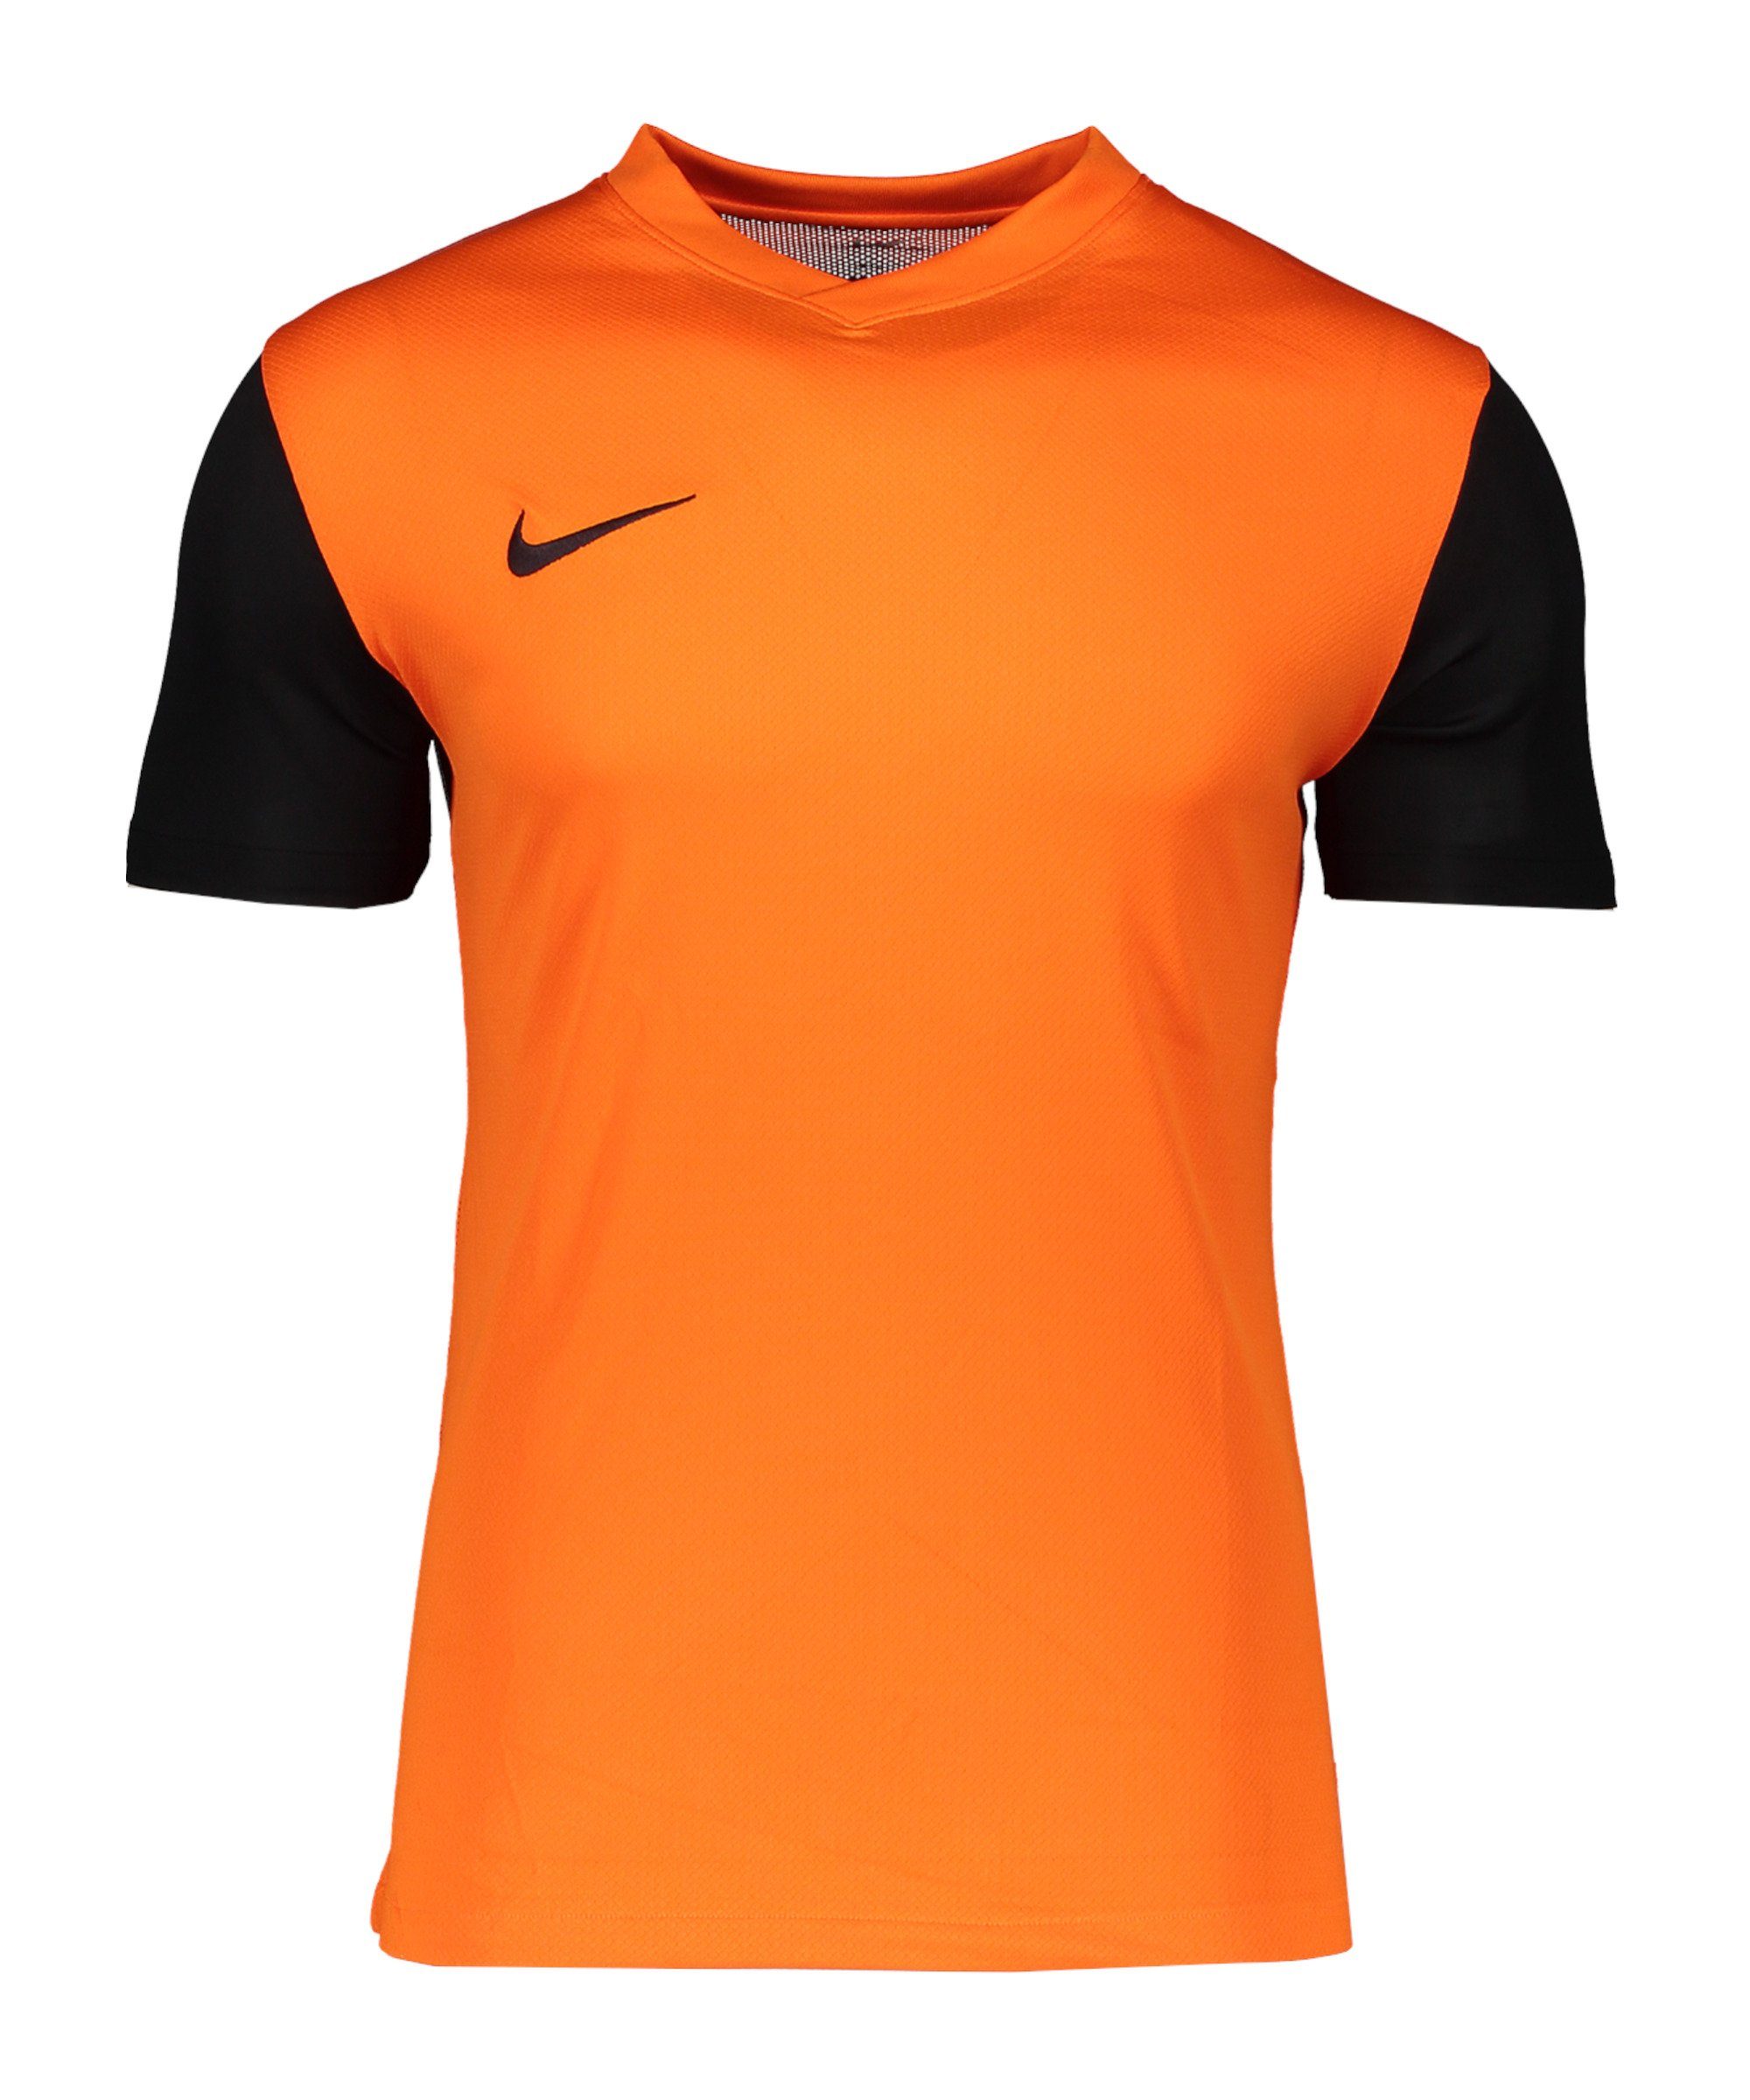 Kids Fußballtrikot Tiempo Nike Trikot orangeschwarz II Premier